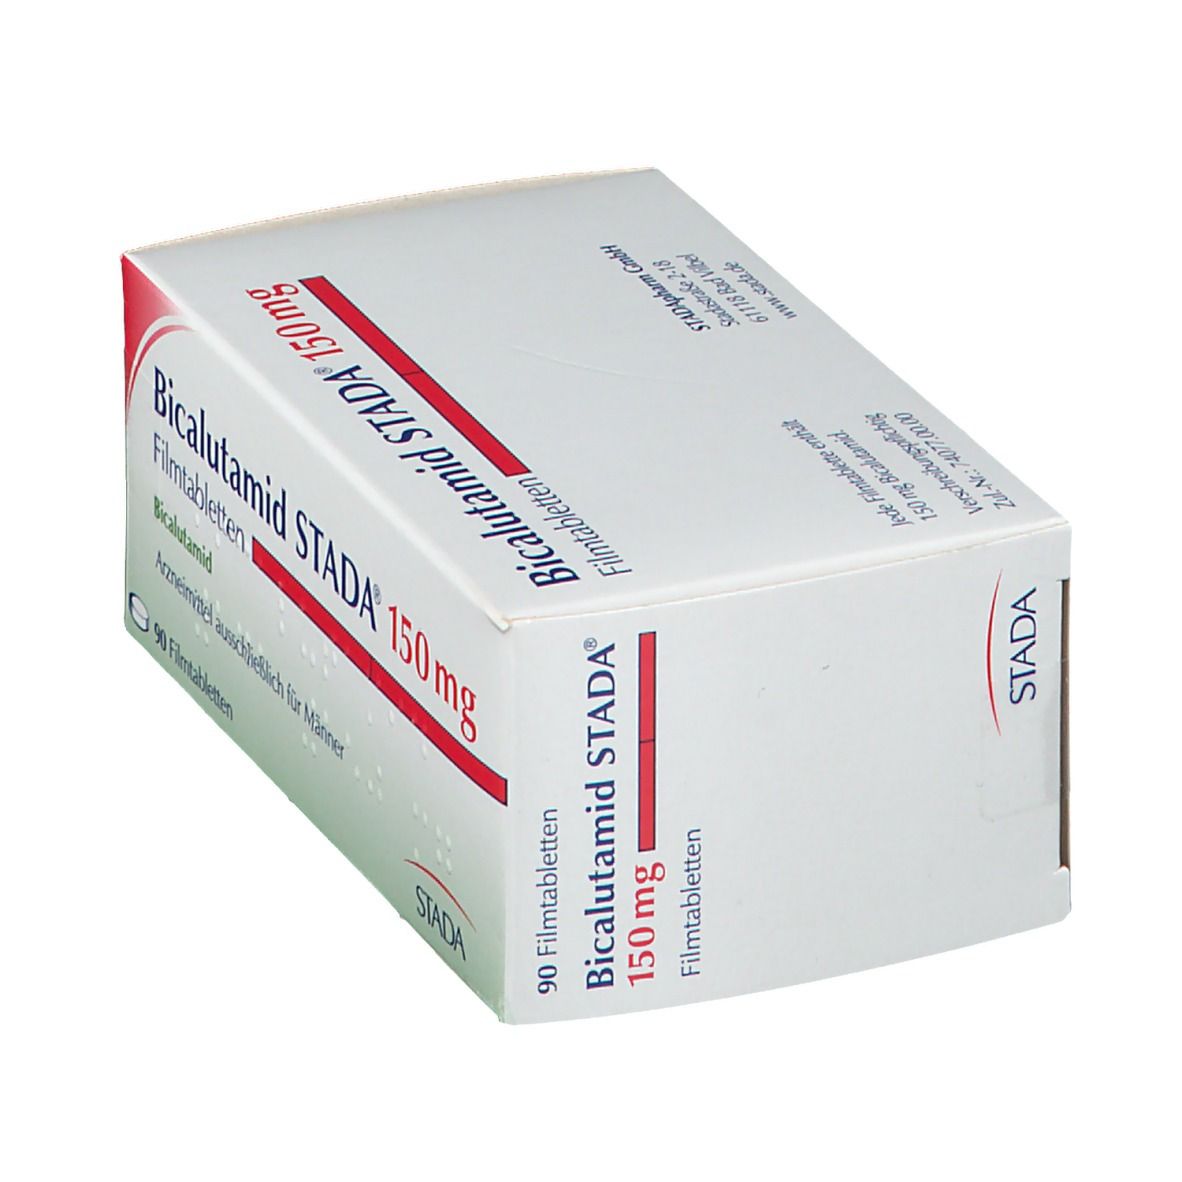 Bicalutamid STADA® 150 mg